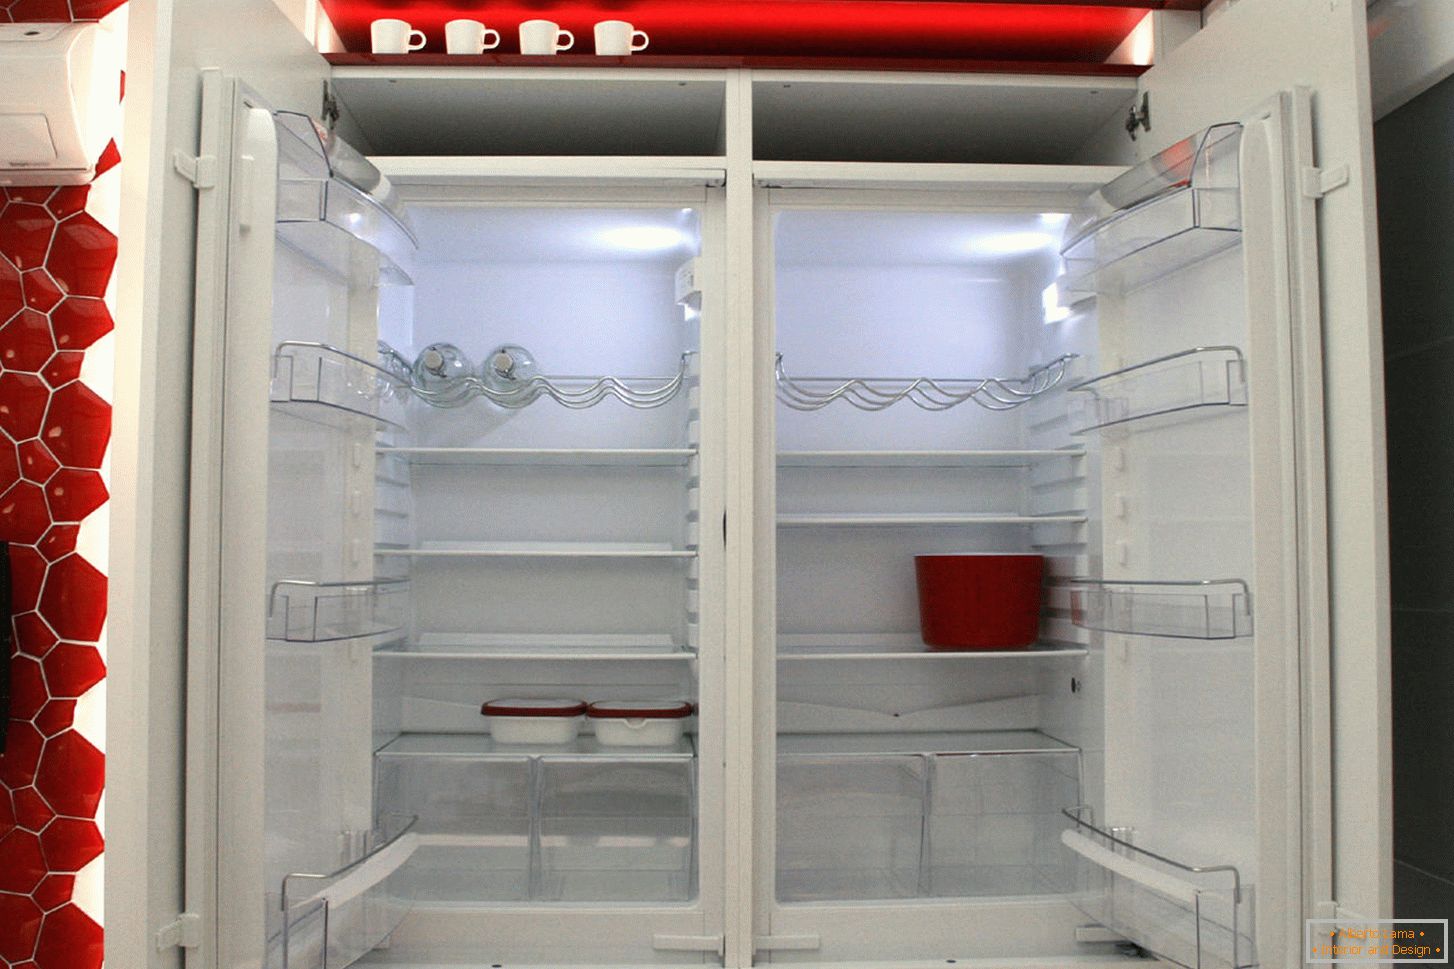 Modern refrigerator in the interior of the kitchen